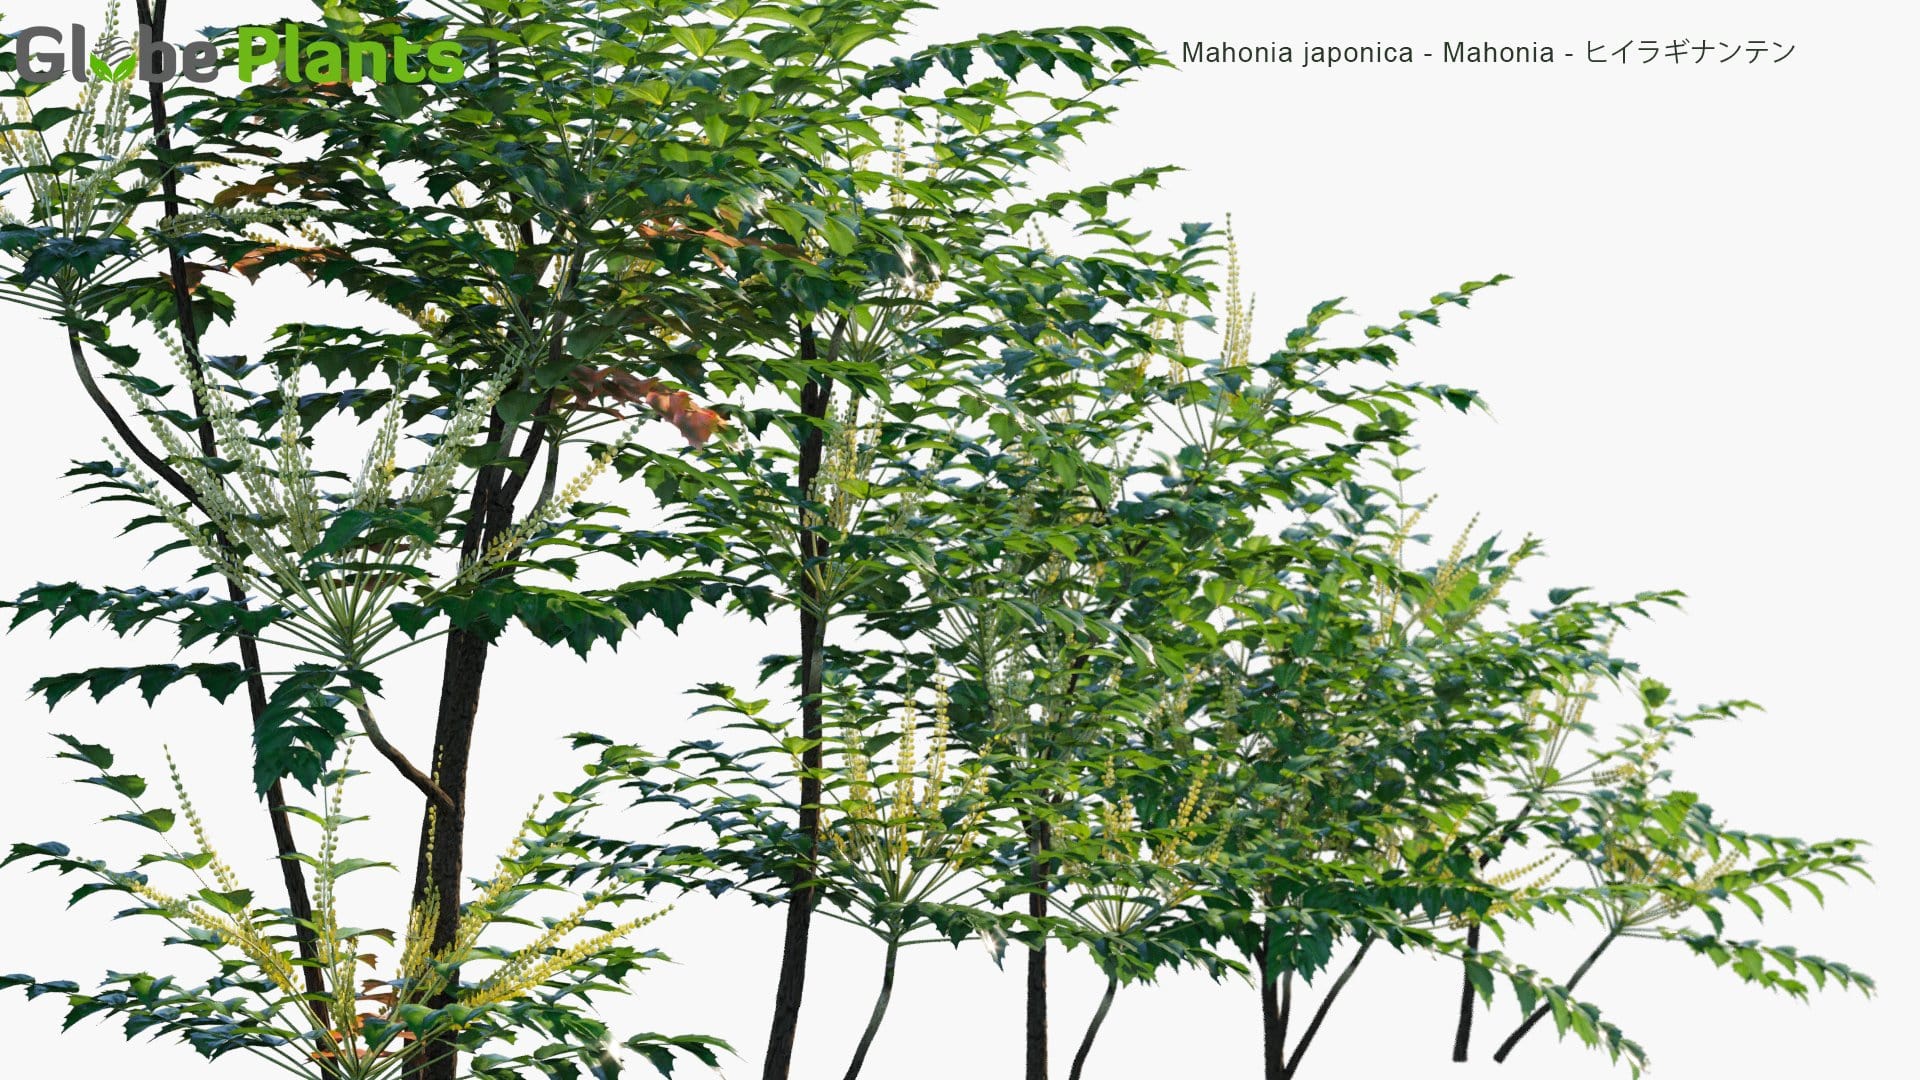 Mahonia Japonica - Mahonia, ヒイラギナンテン (3D Model)